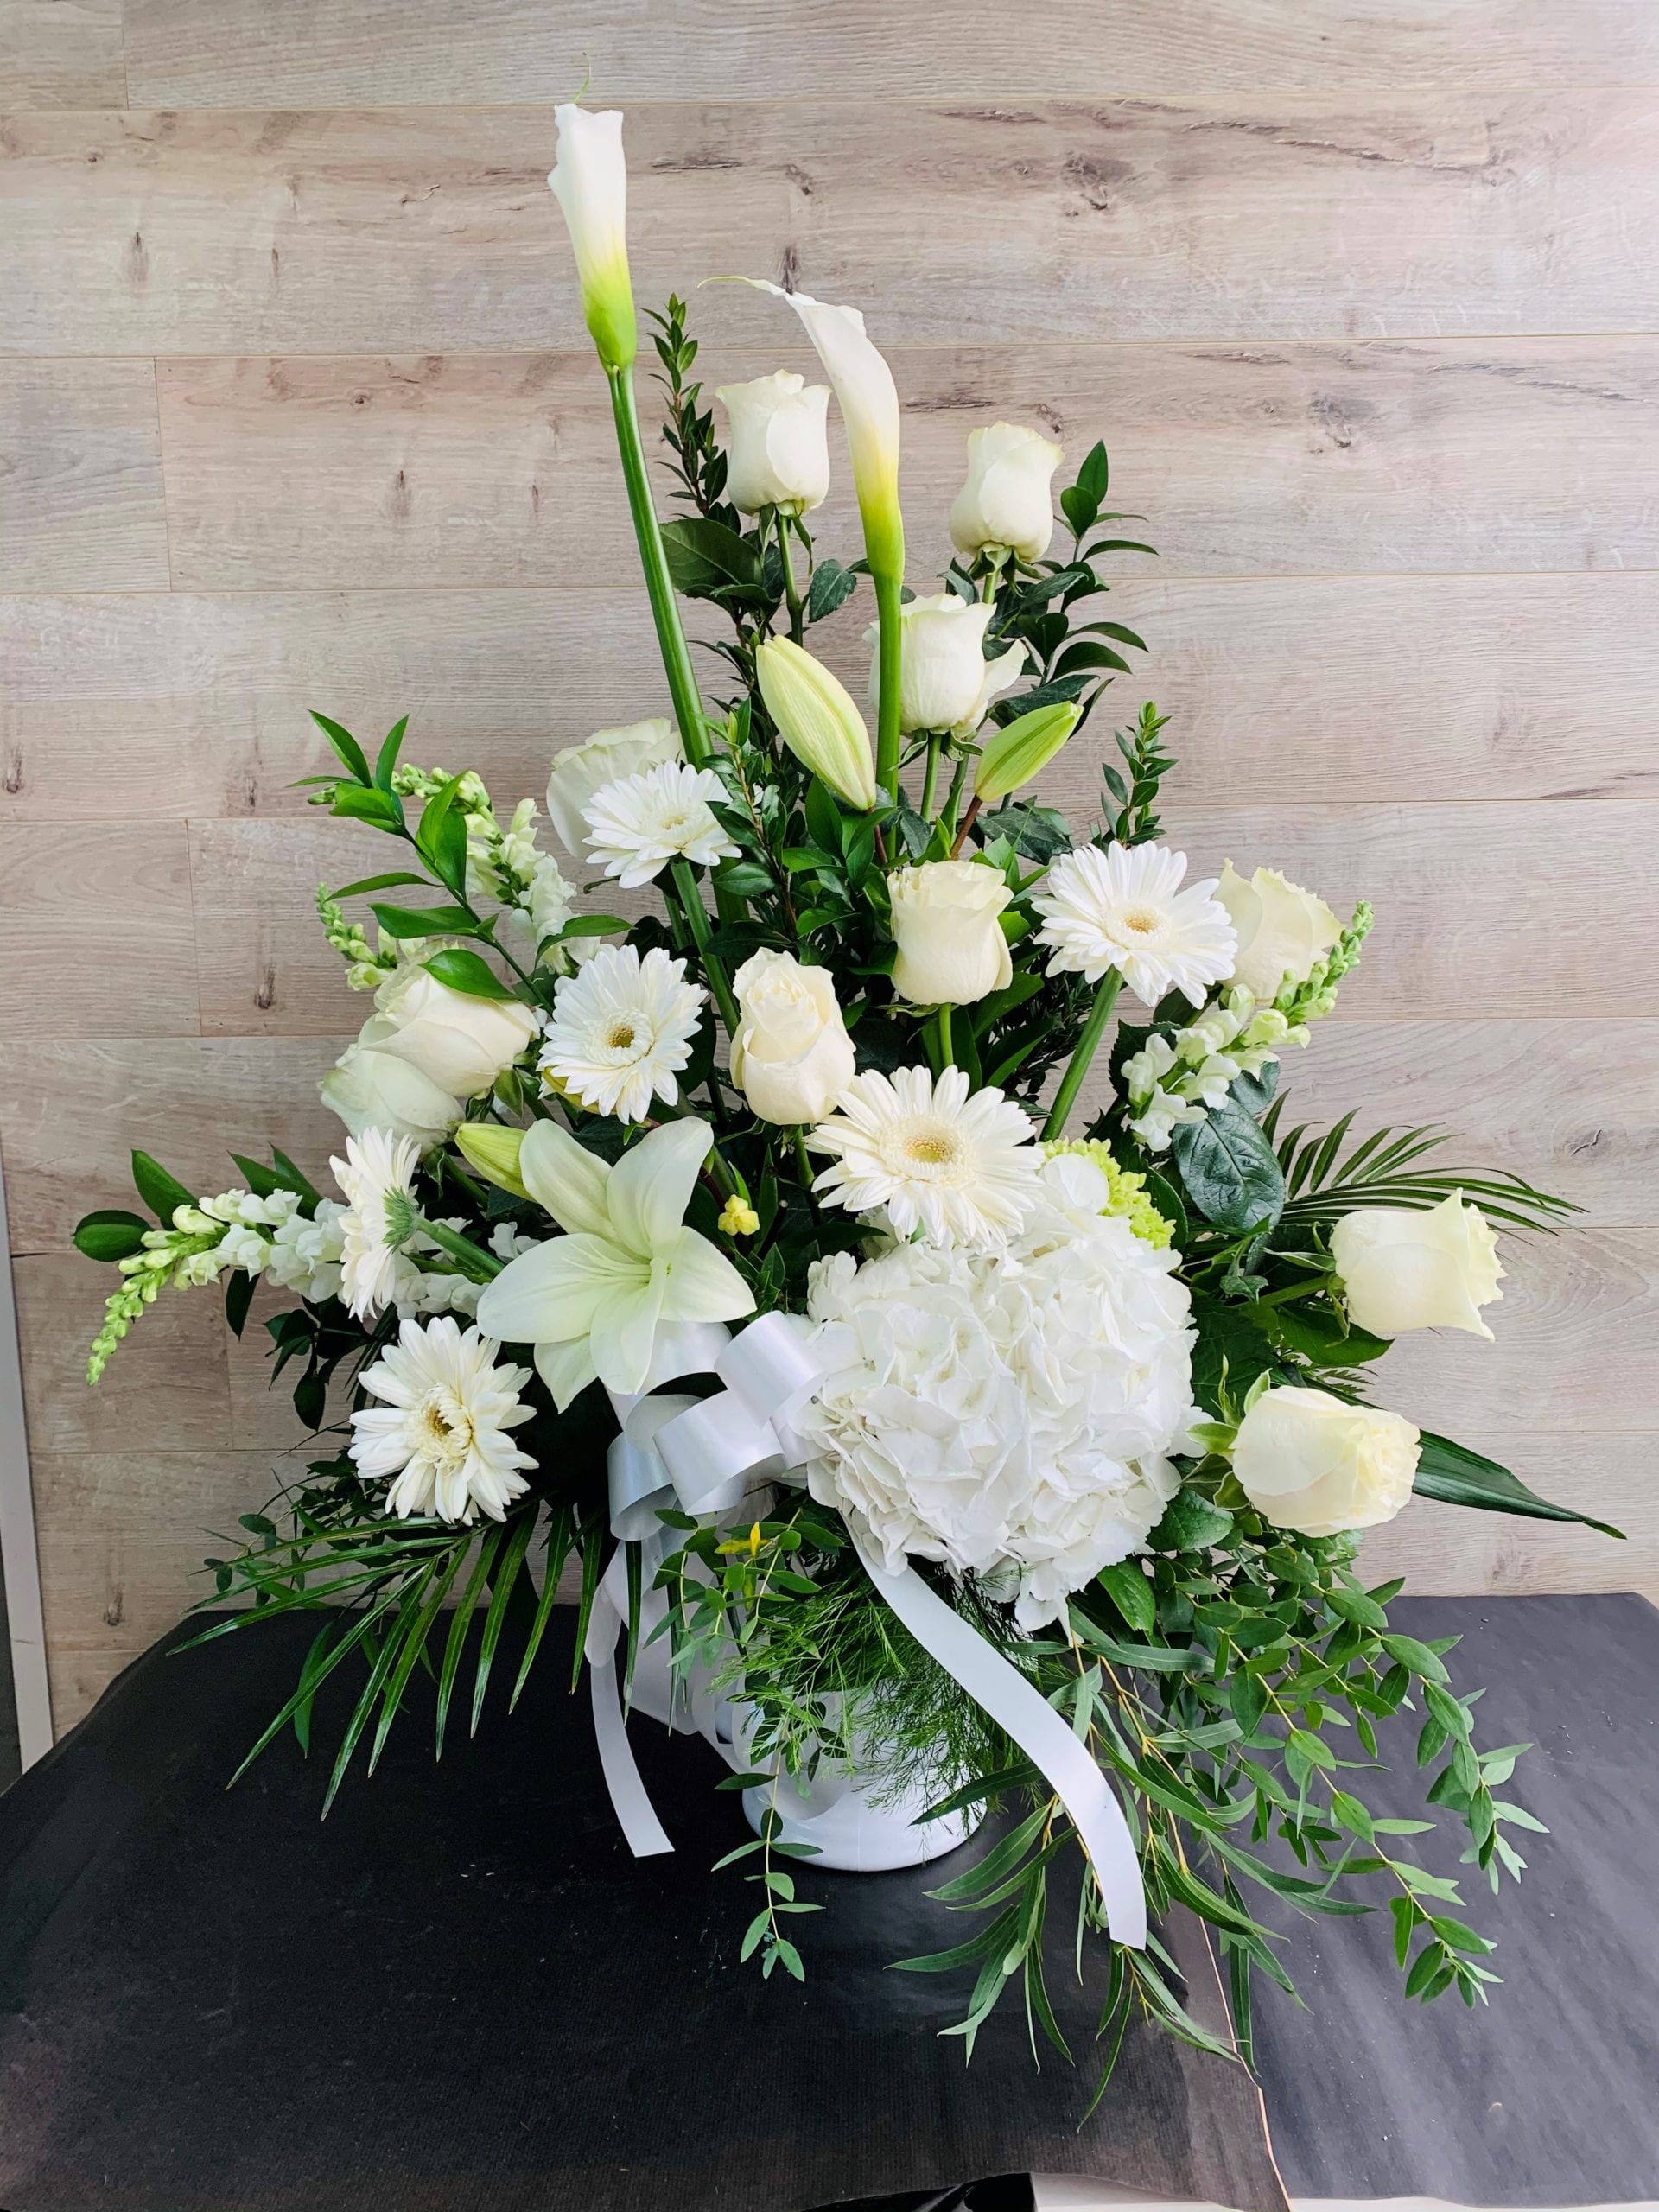 Funeral Arrangement  Funeral Flower Delivery, Philadelphia Florist -  Robertson's Flowers